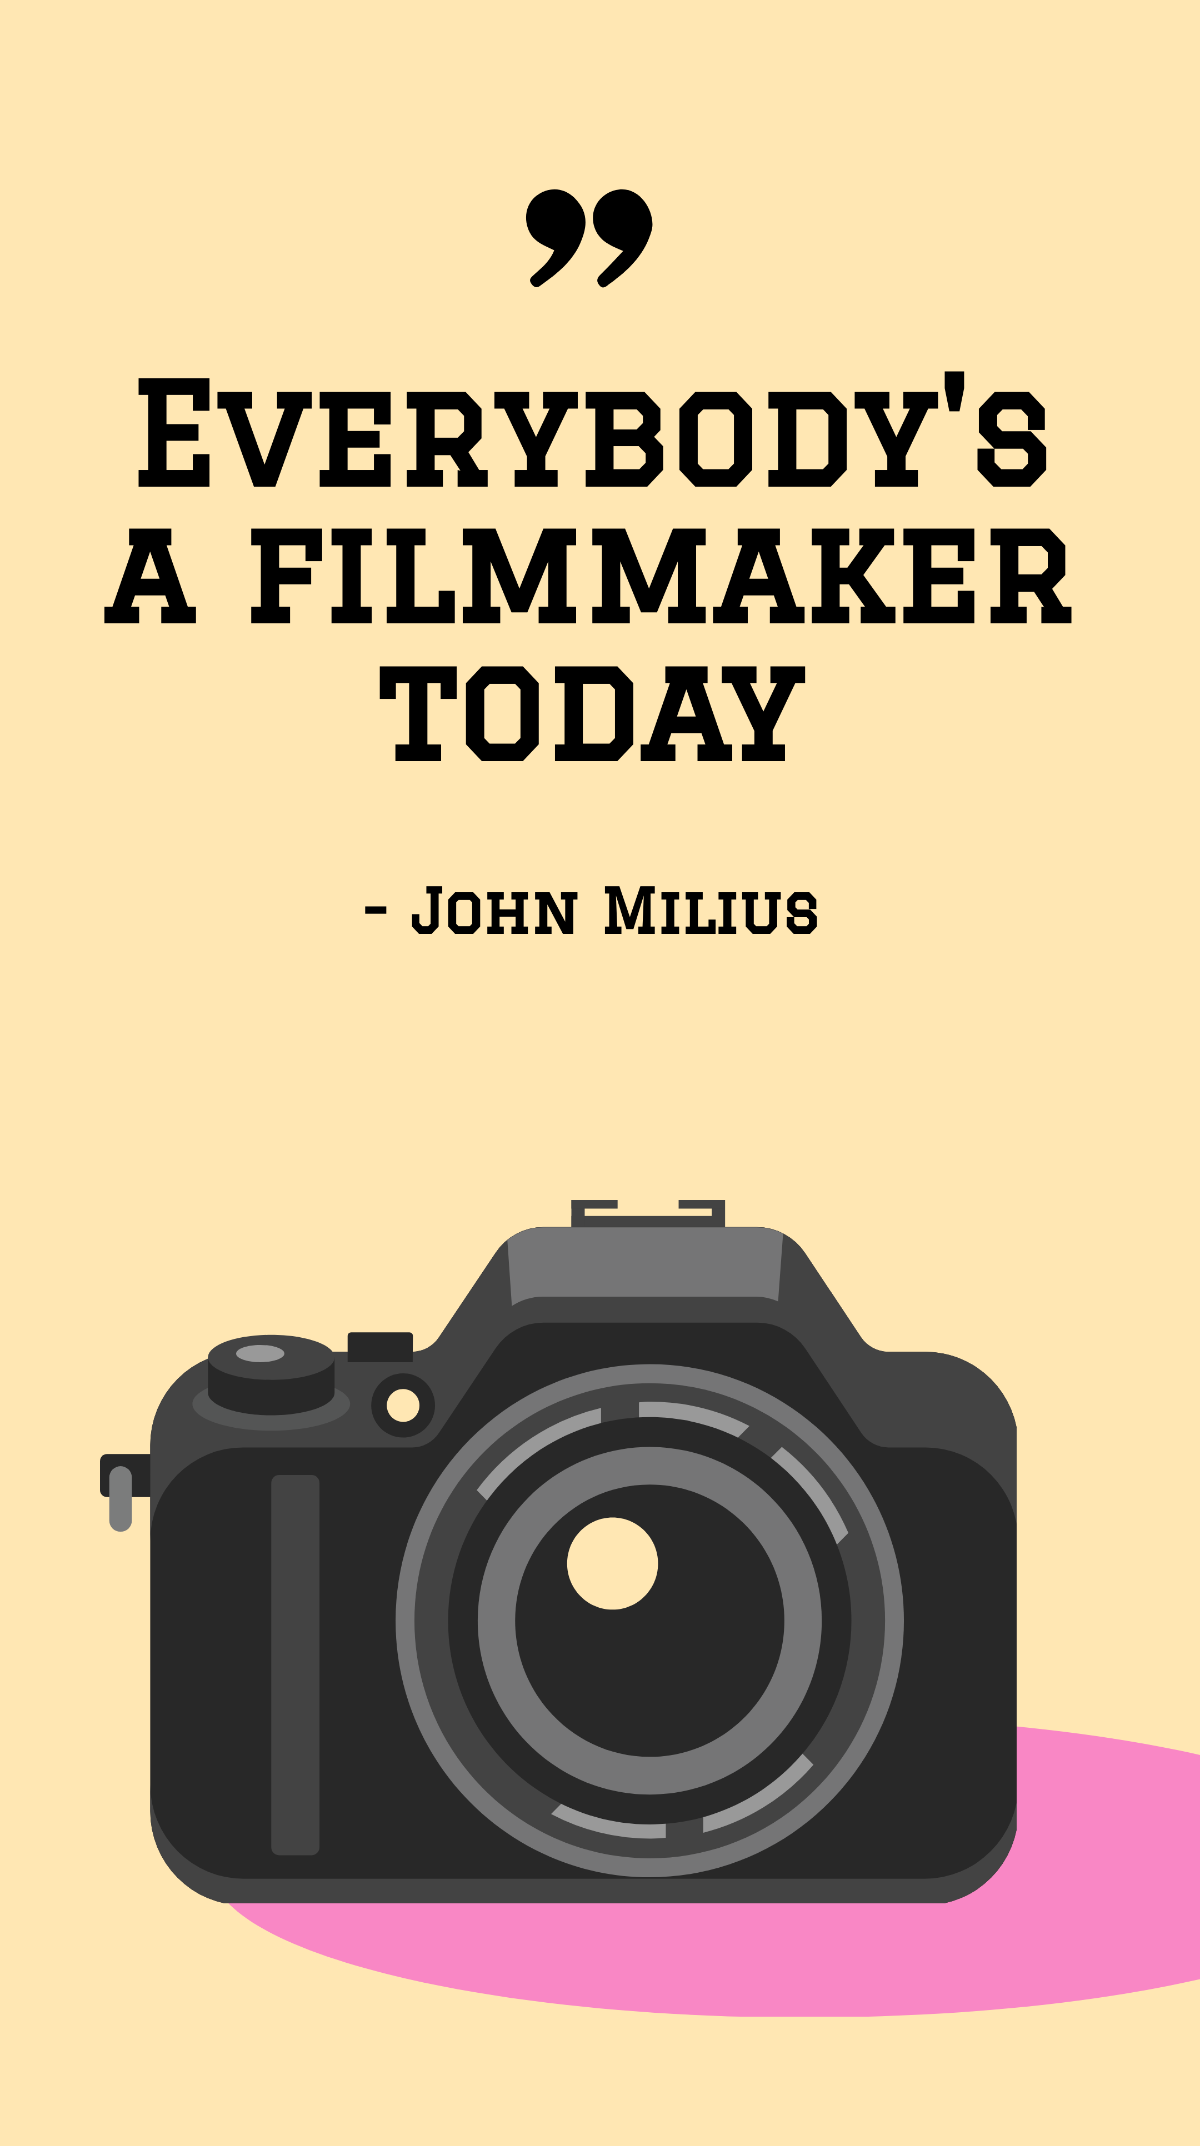 John Milius - Everybody's a filmmaker today